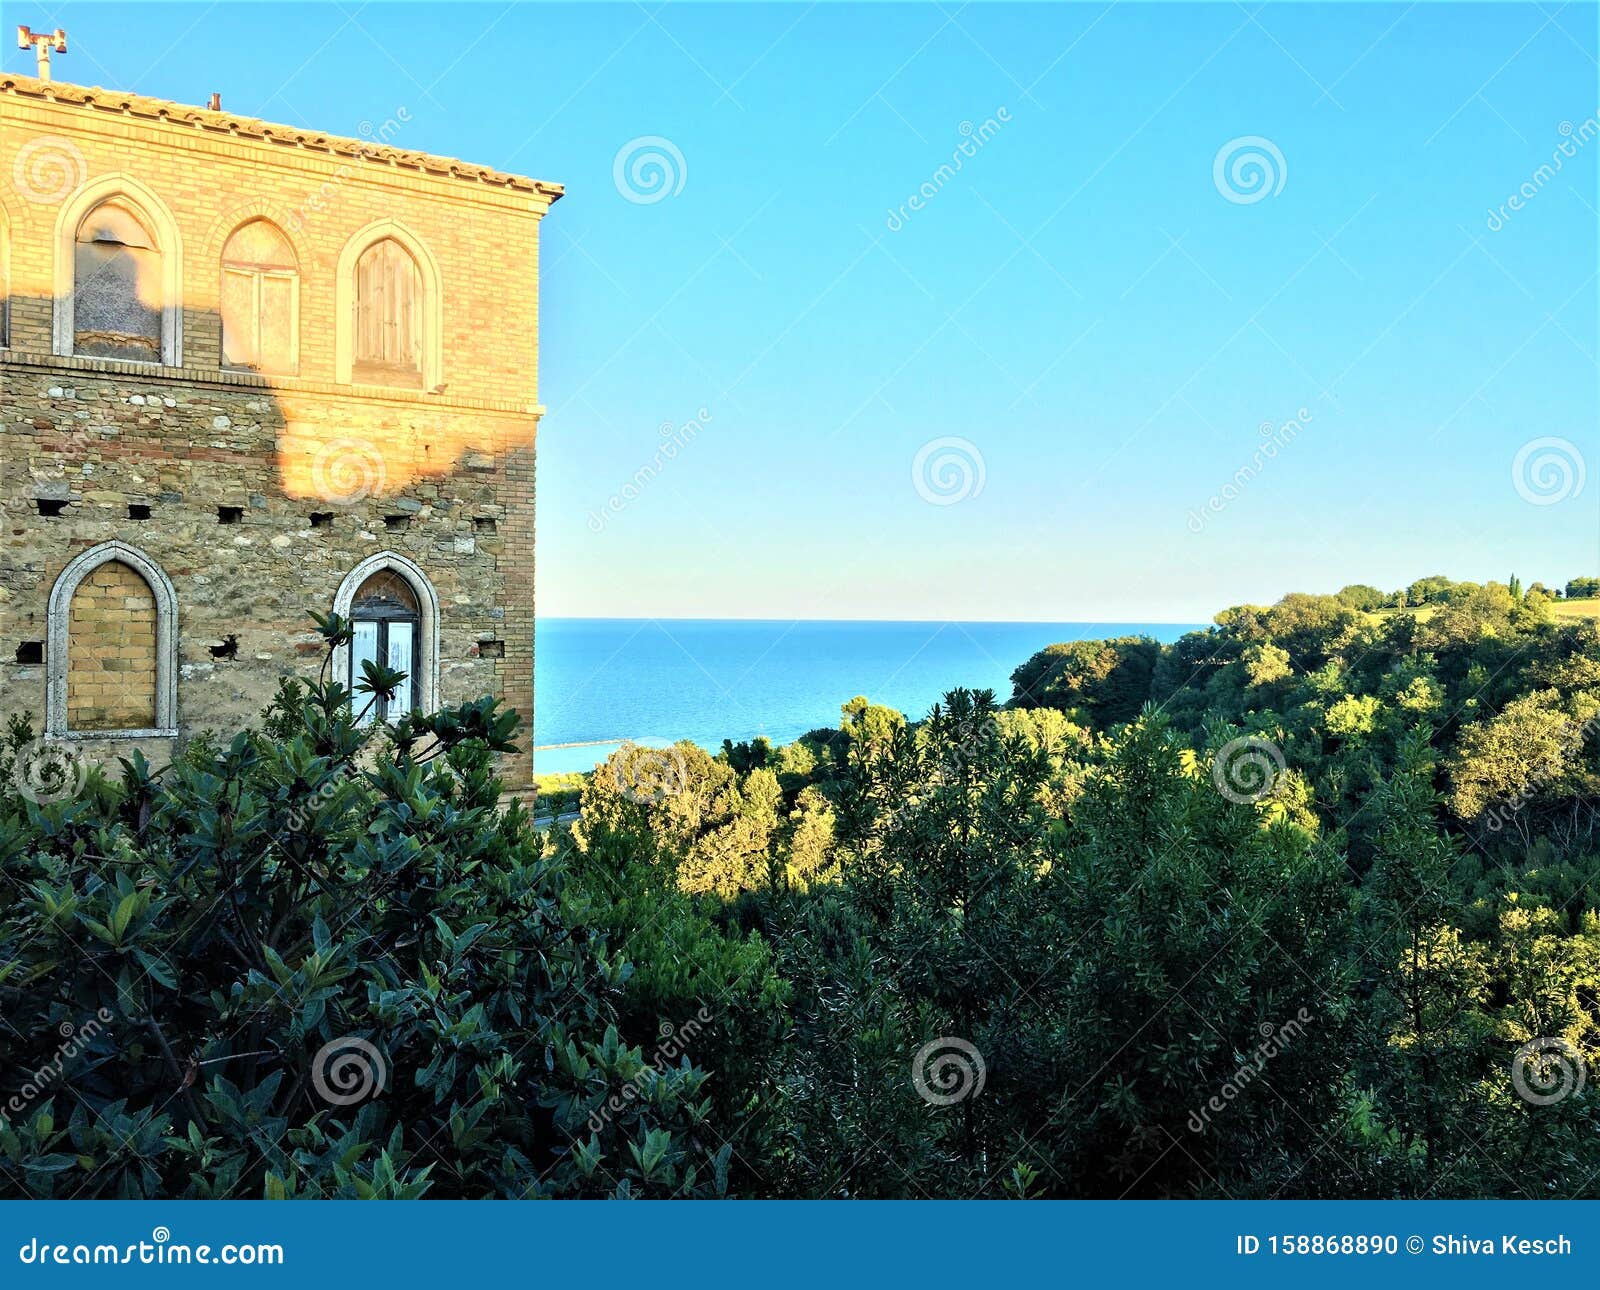 torre di palme town in marche region, italy. sea, nature and history